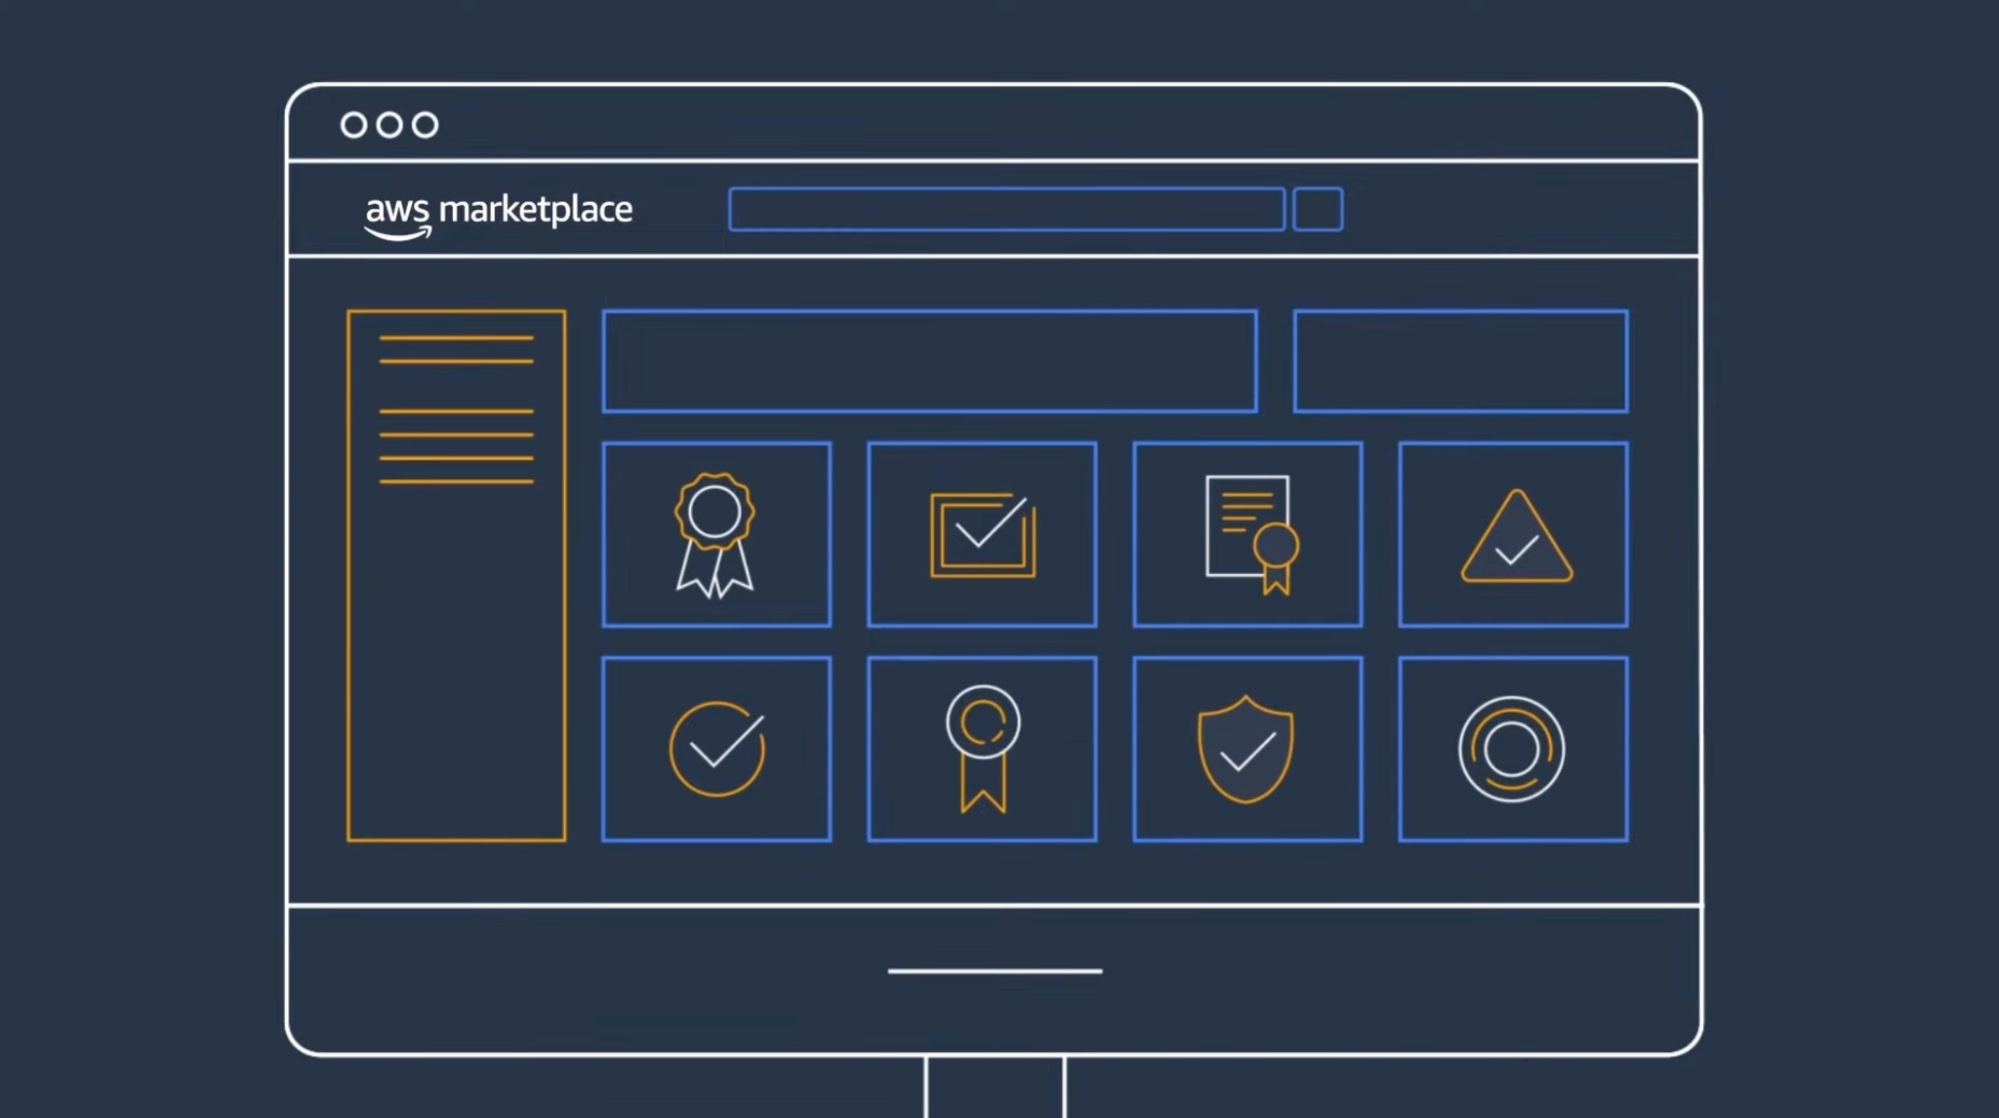 Elastic joins AWS Marketplace Vendor Insights to streamline risk assessment and software procurement